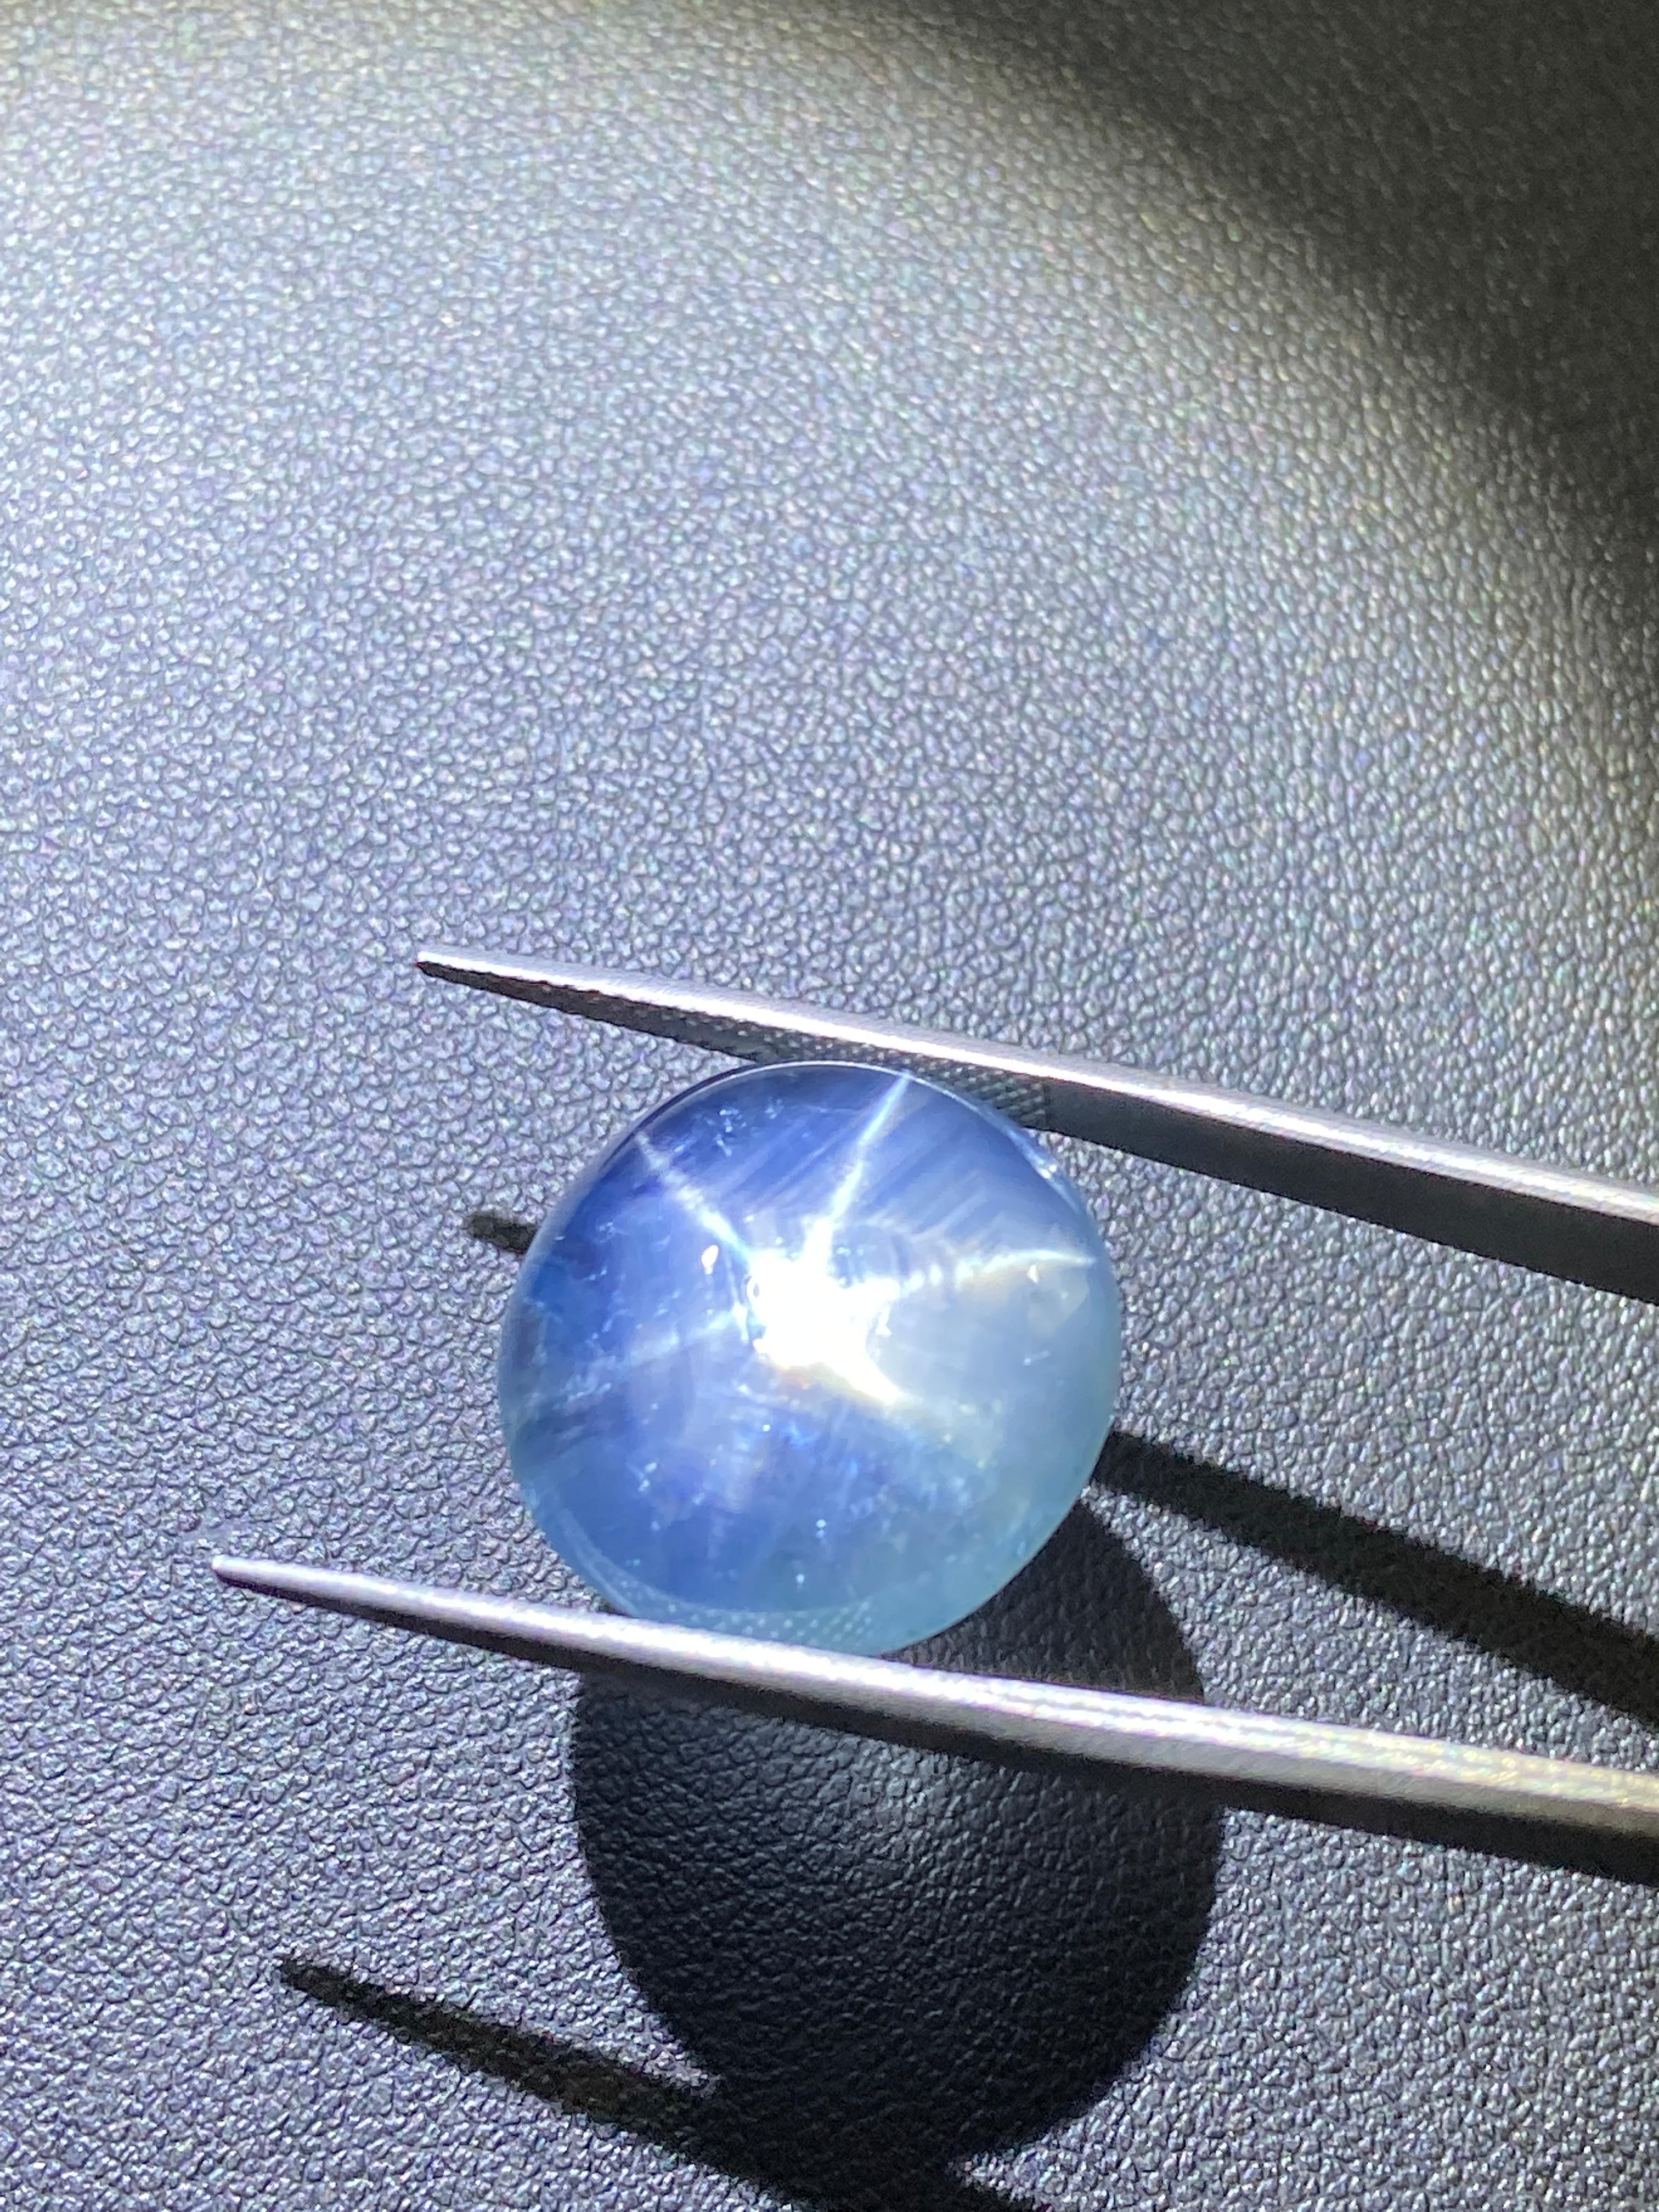 burma star sapphire